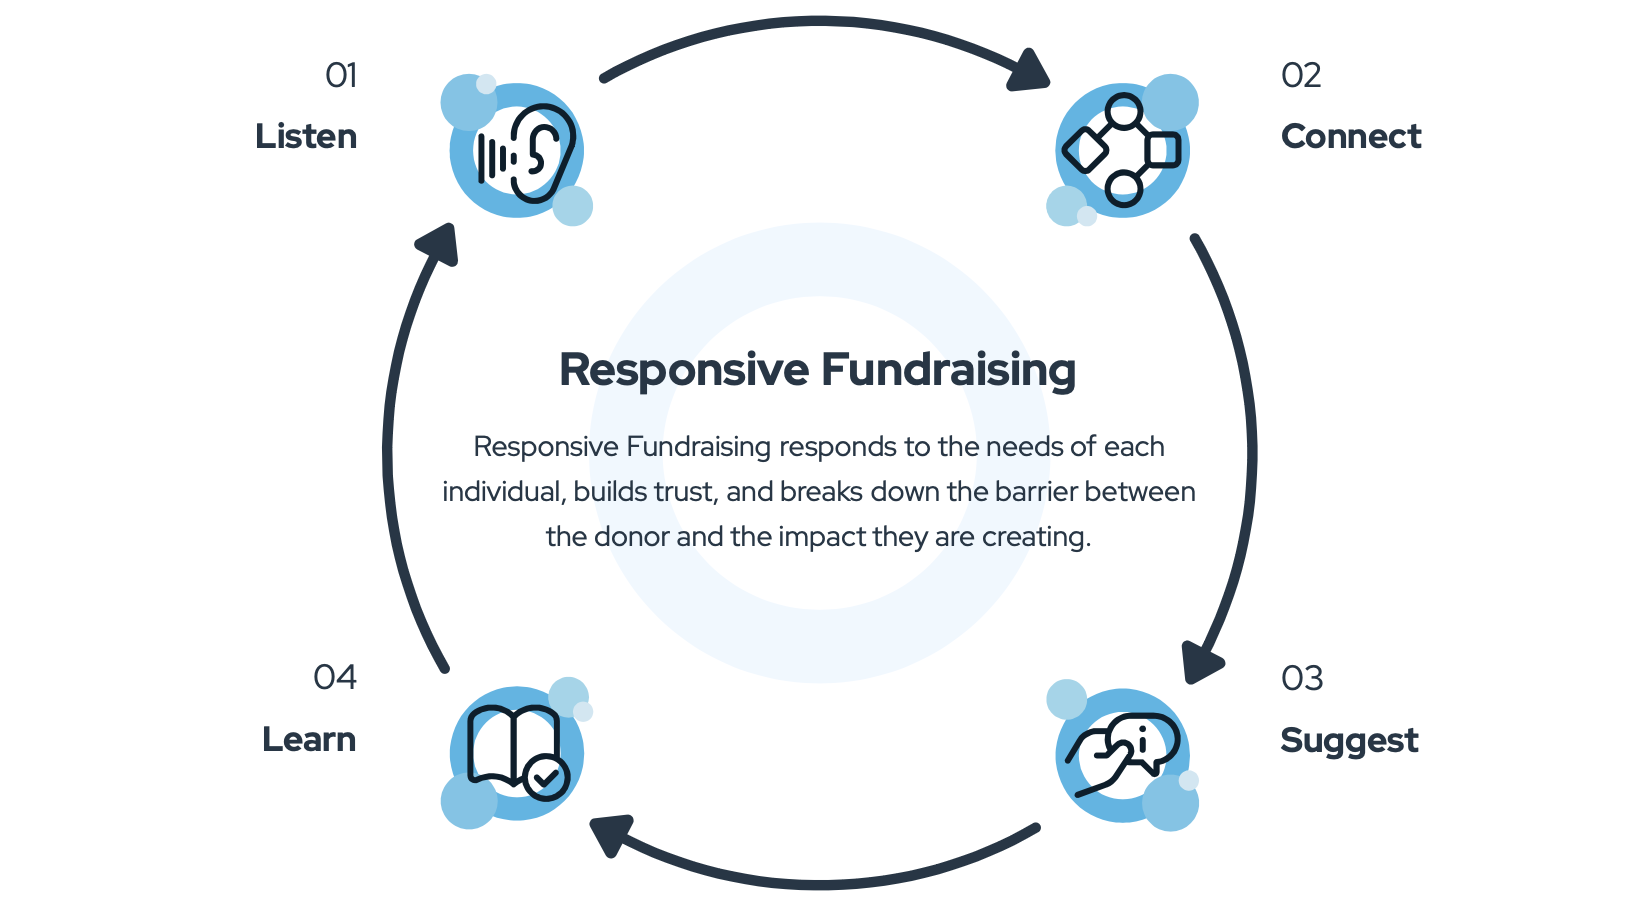 Responsive fundraising framework overview